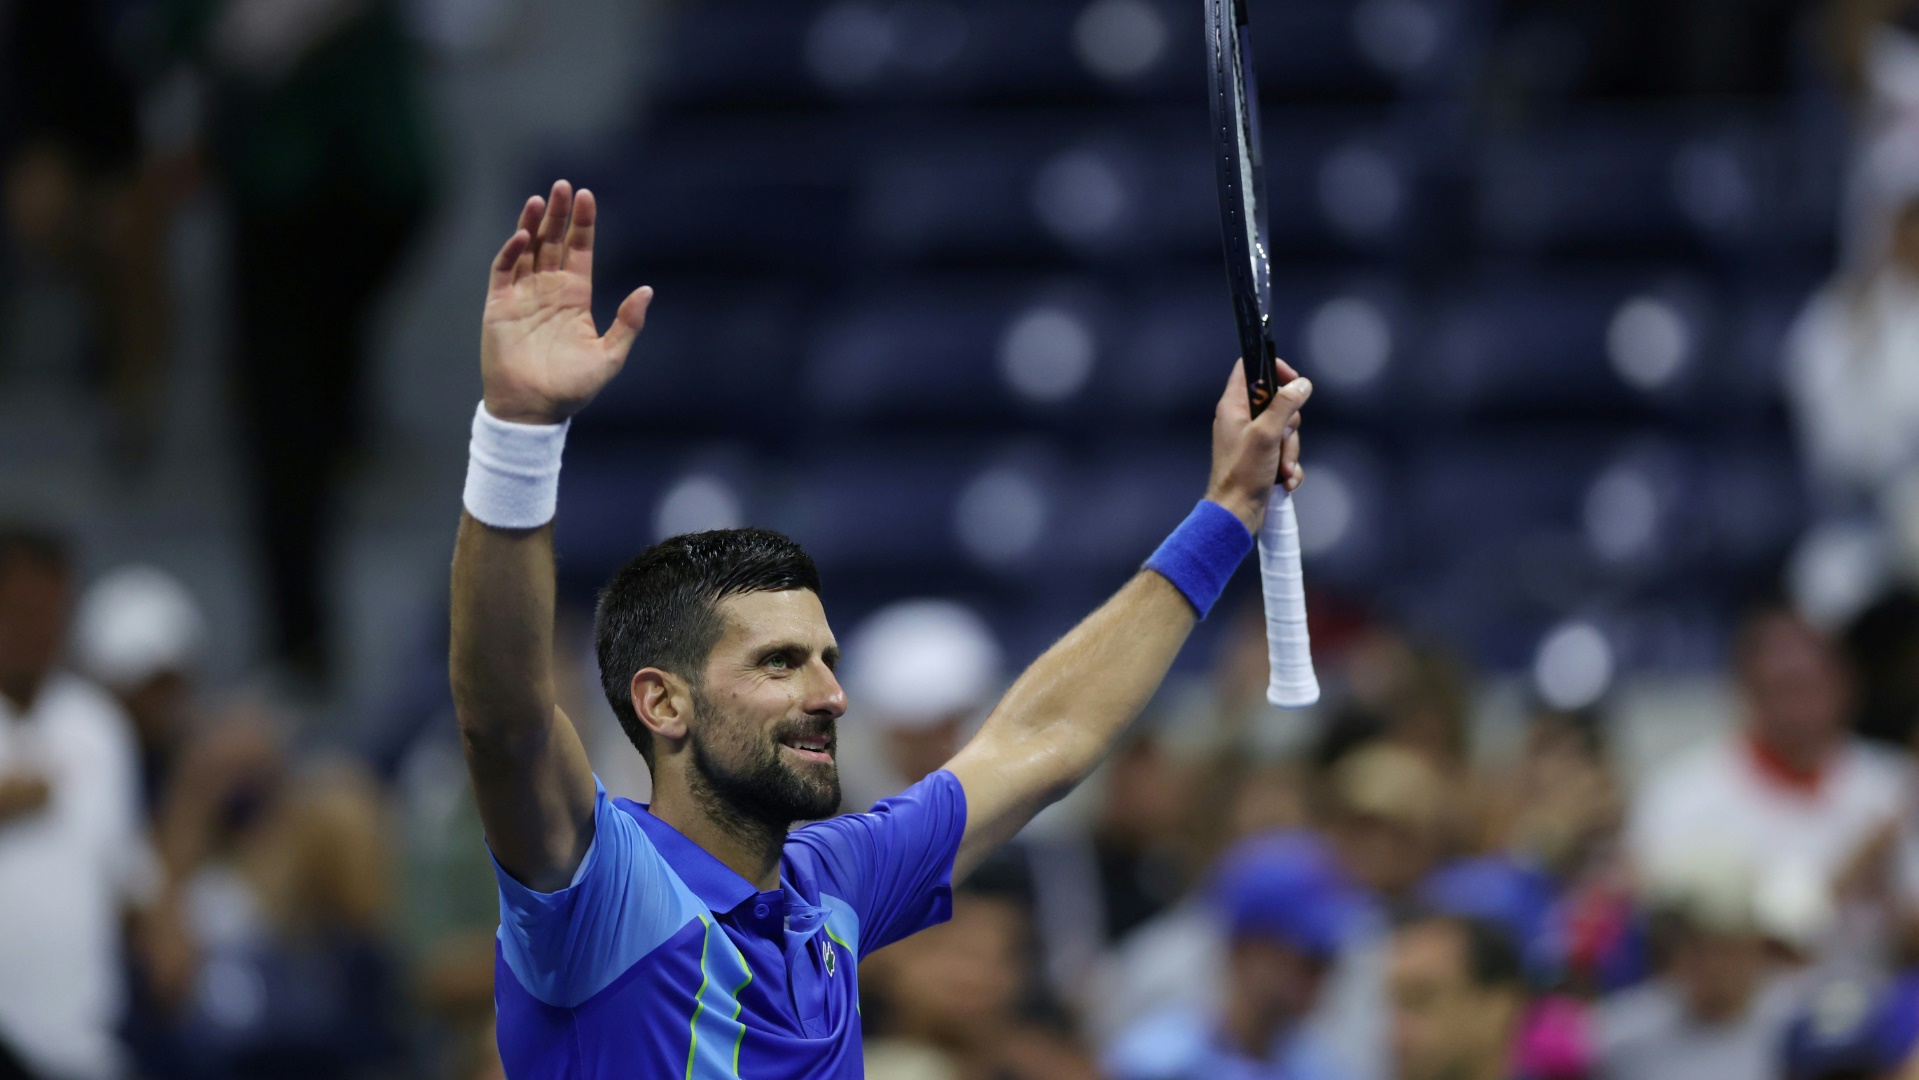 Mühelos in Runde zwei: Novak Djokovic